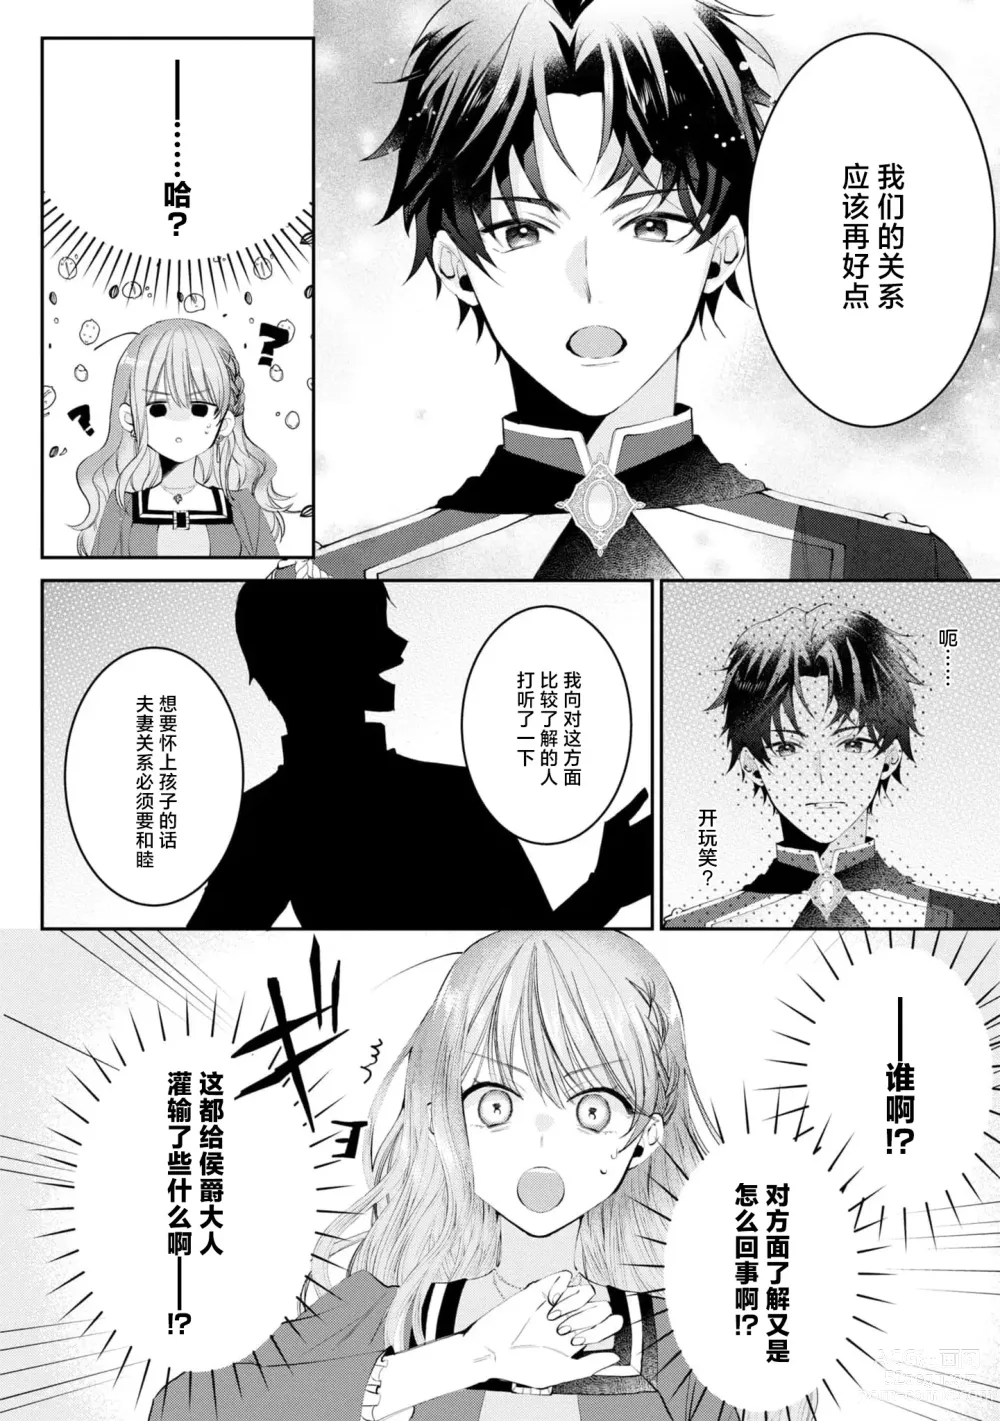 Page 10 of manga 侯爵大人被戏称『机器人』直到变成模范丈夫